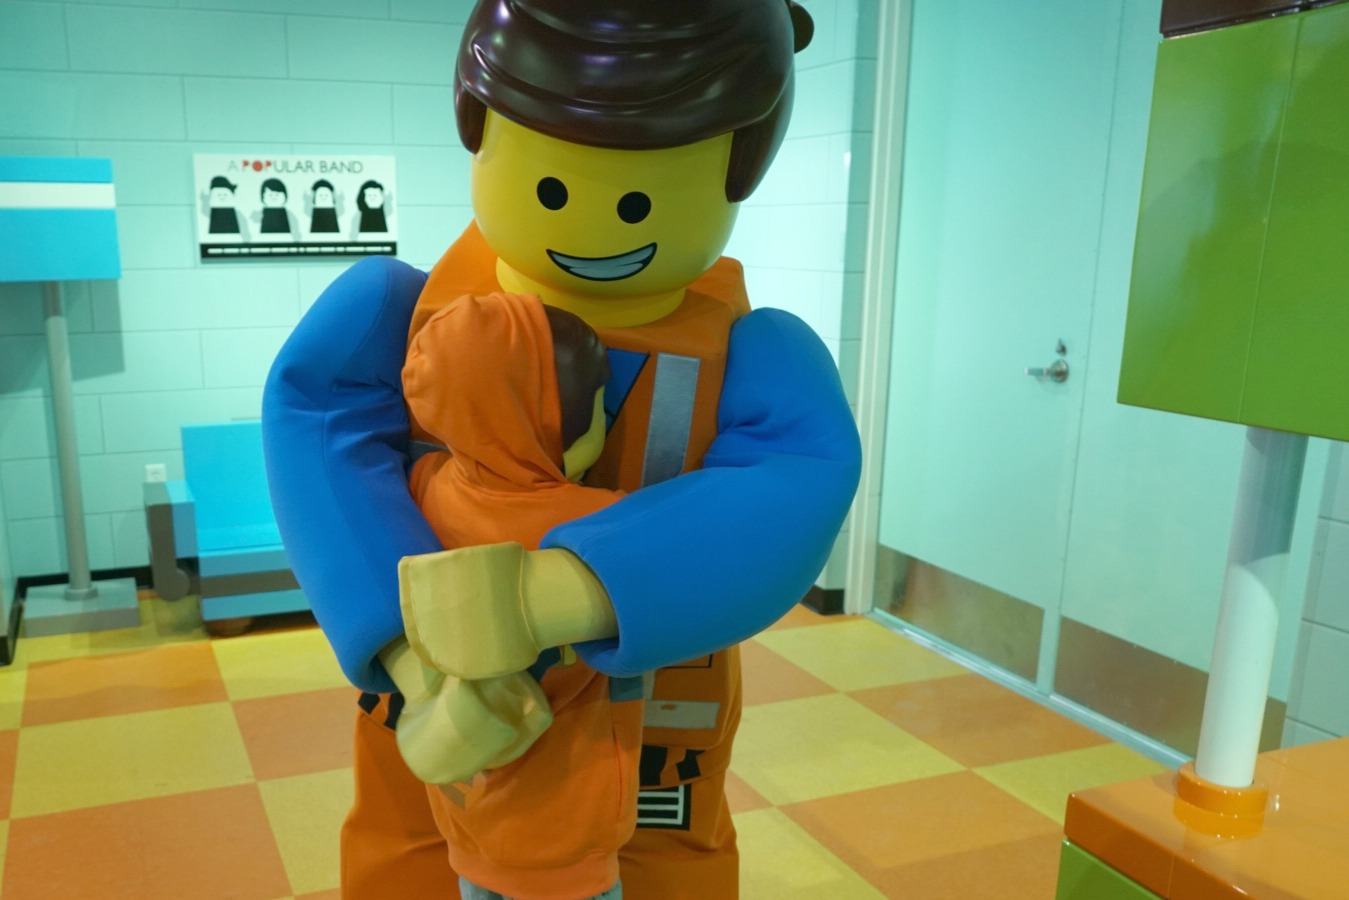 Legoland character meet and greet